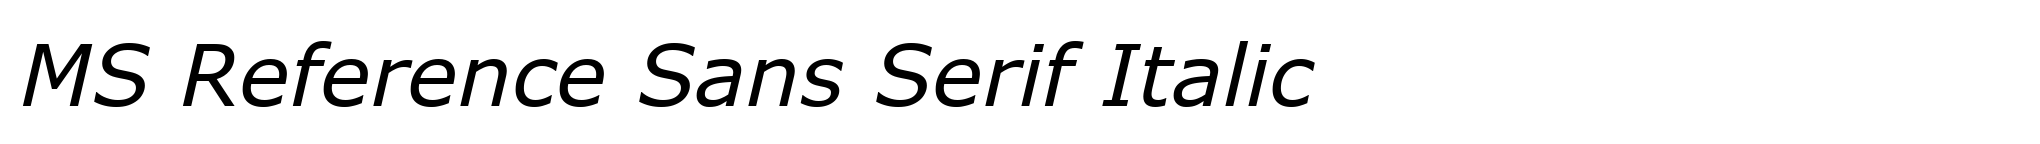 MS Reference Sans Serif Italic image